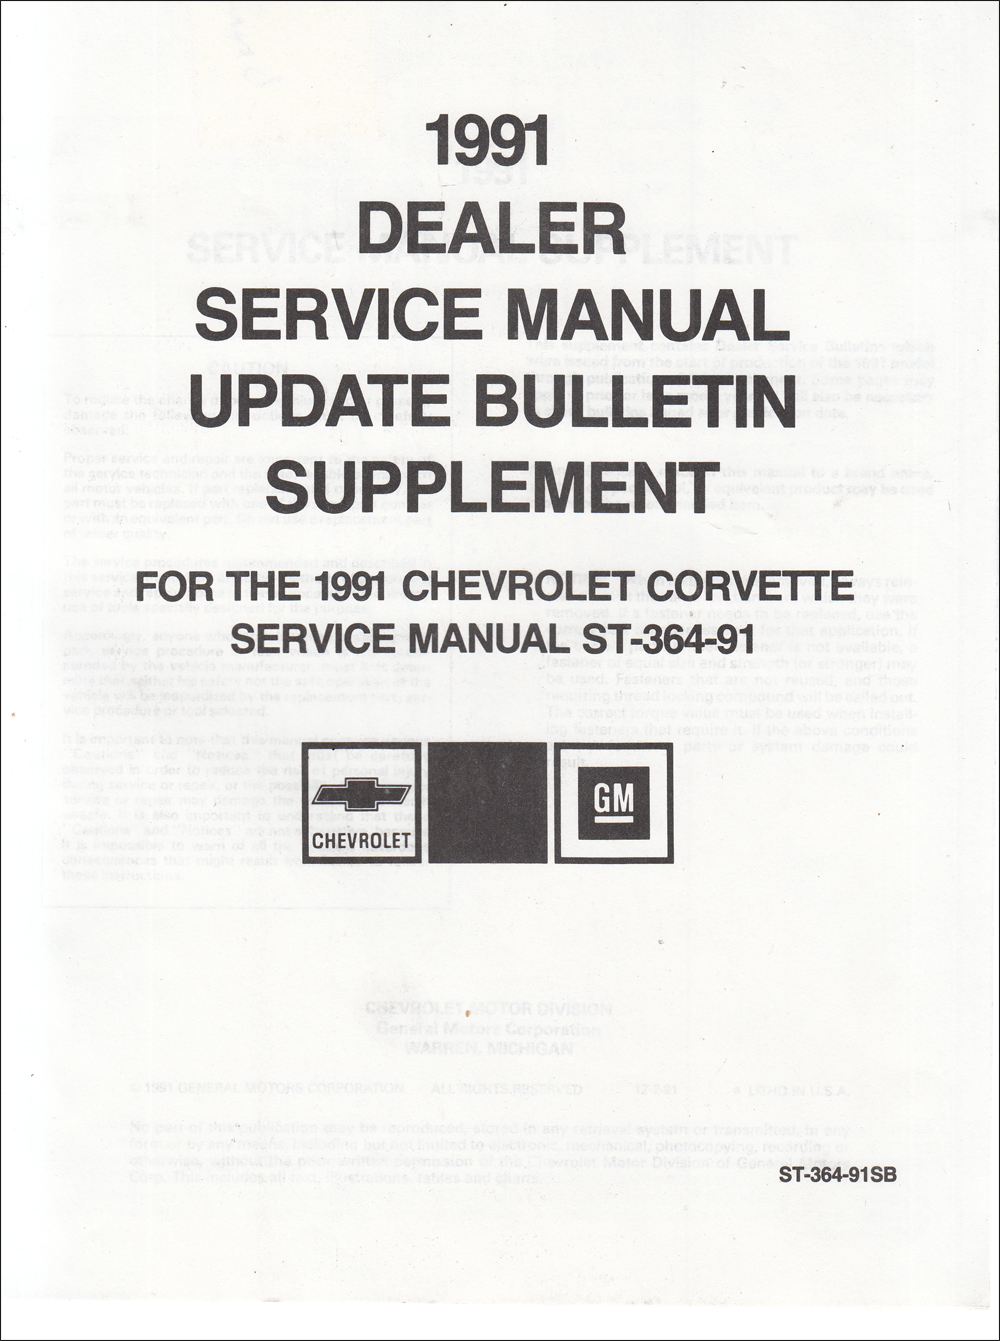 1991 Chevrolet Corvette Shop Manual Manual Service Bulletin Supplement Update